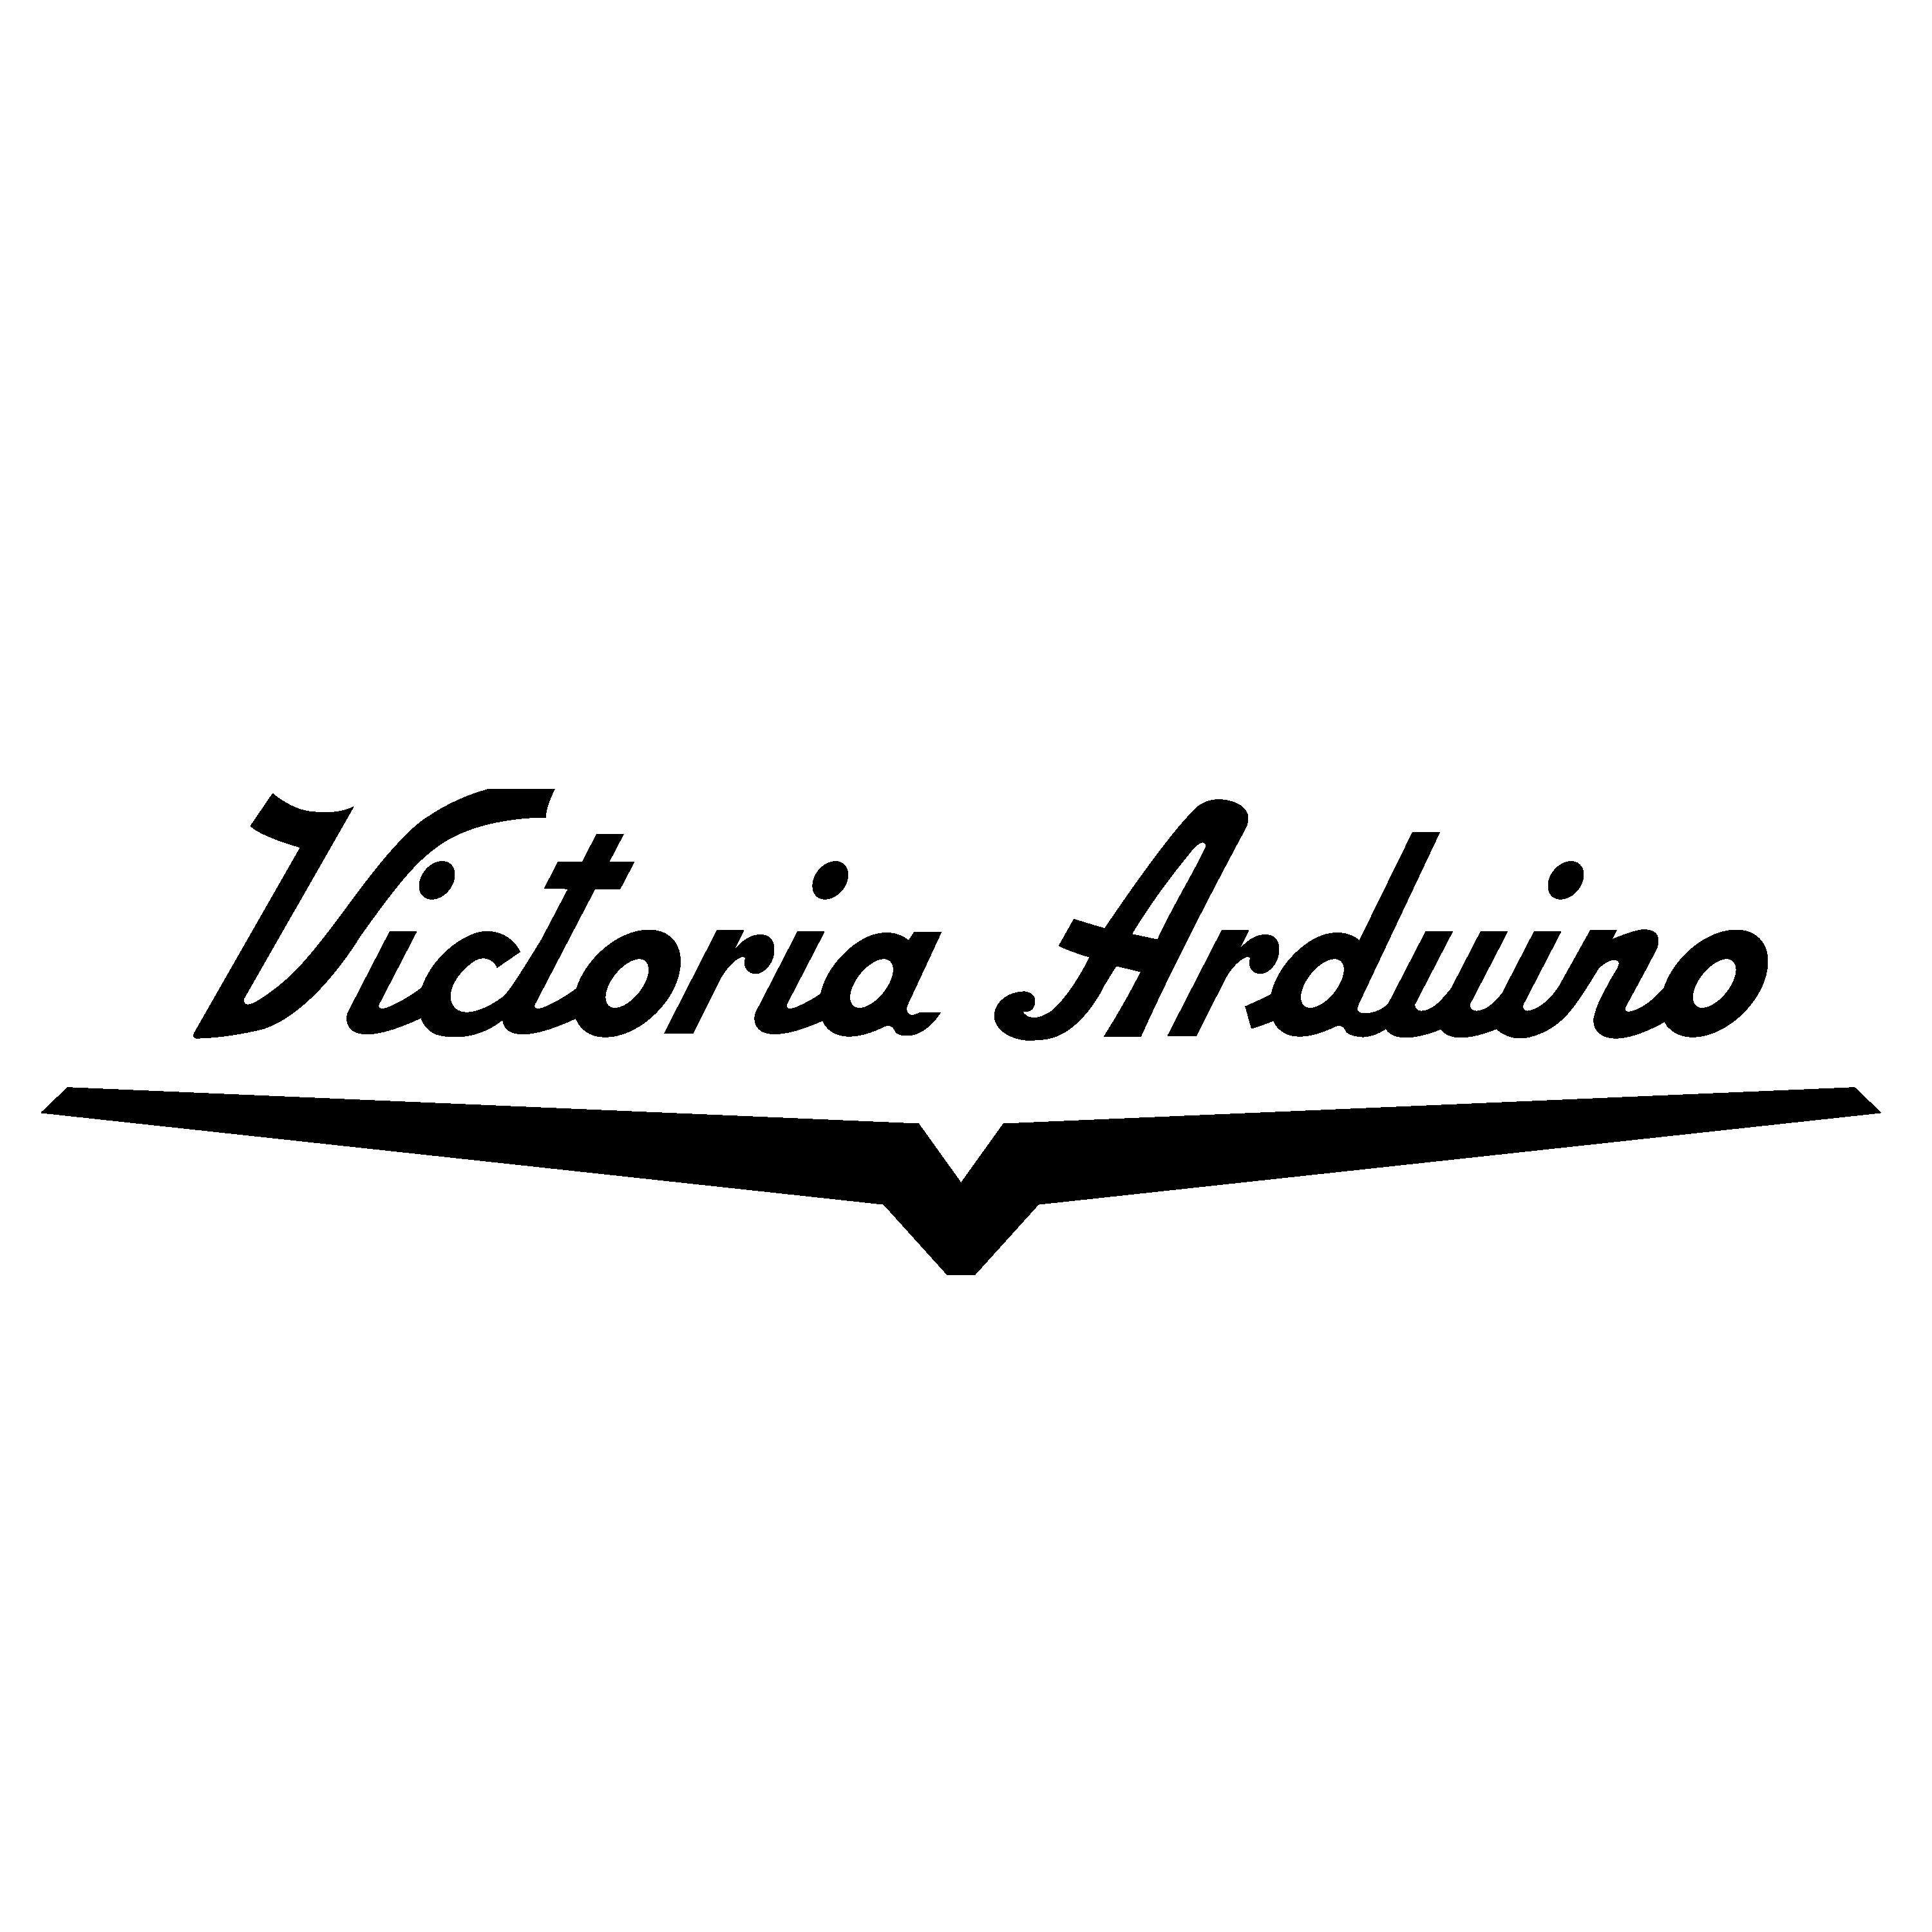 VICTORIA ARDUINO